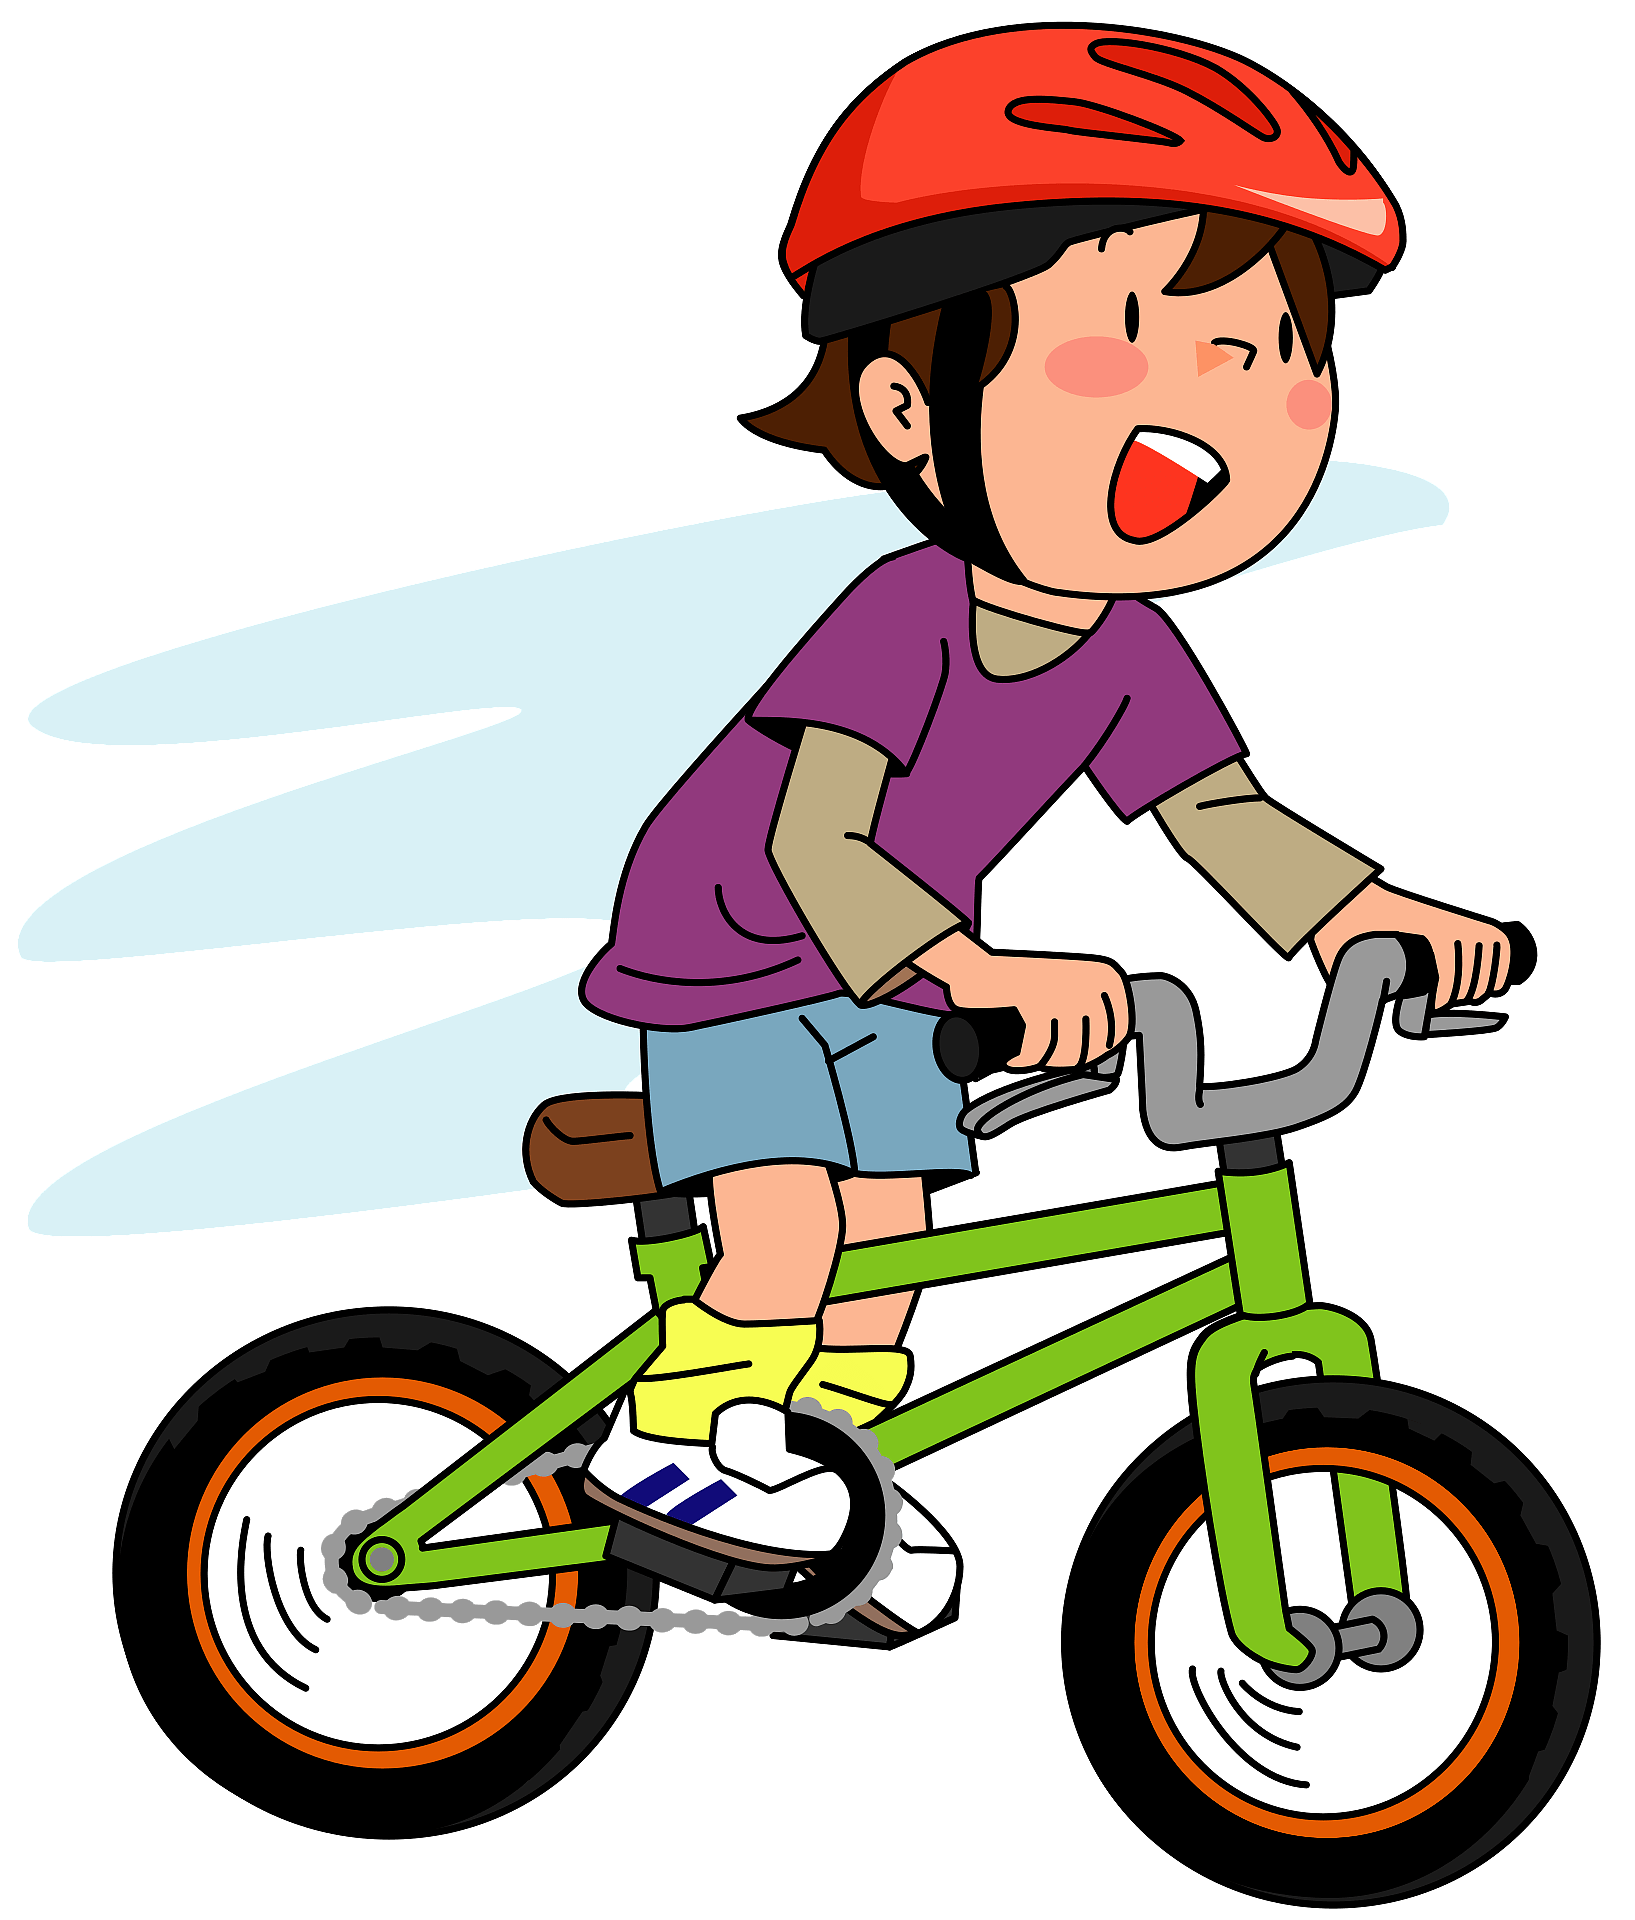 Ride a fly bike. Мальчик на велосипеде. Велосипед рисунок. Мальчик катается на велосипеде. Ride a Bike для детей.